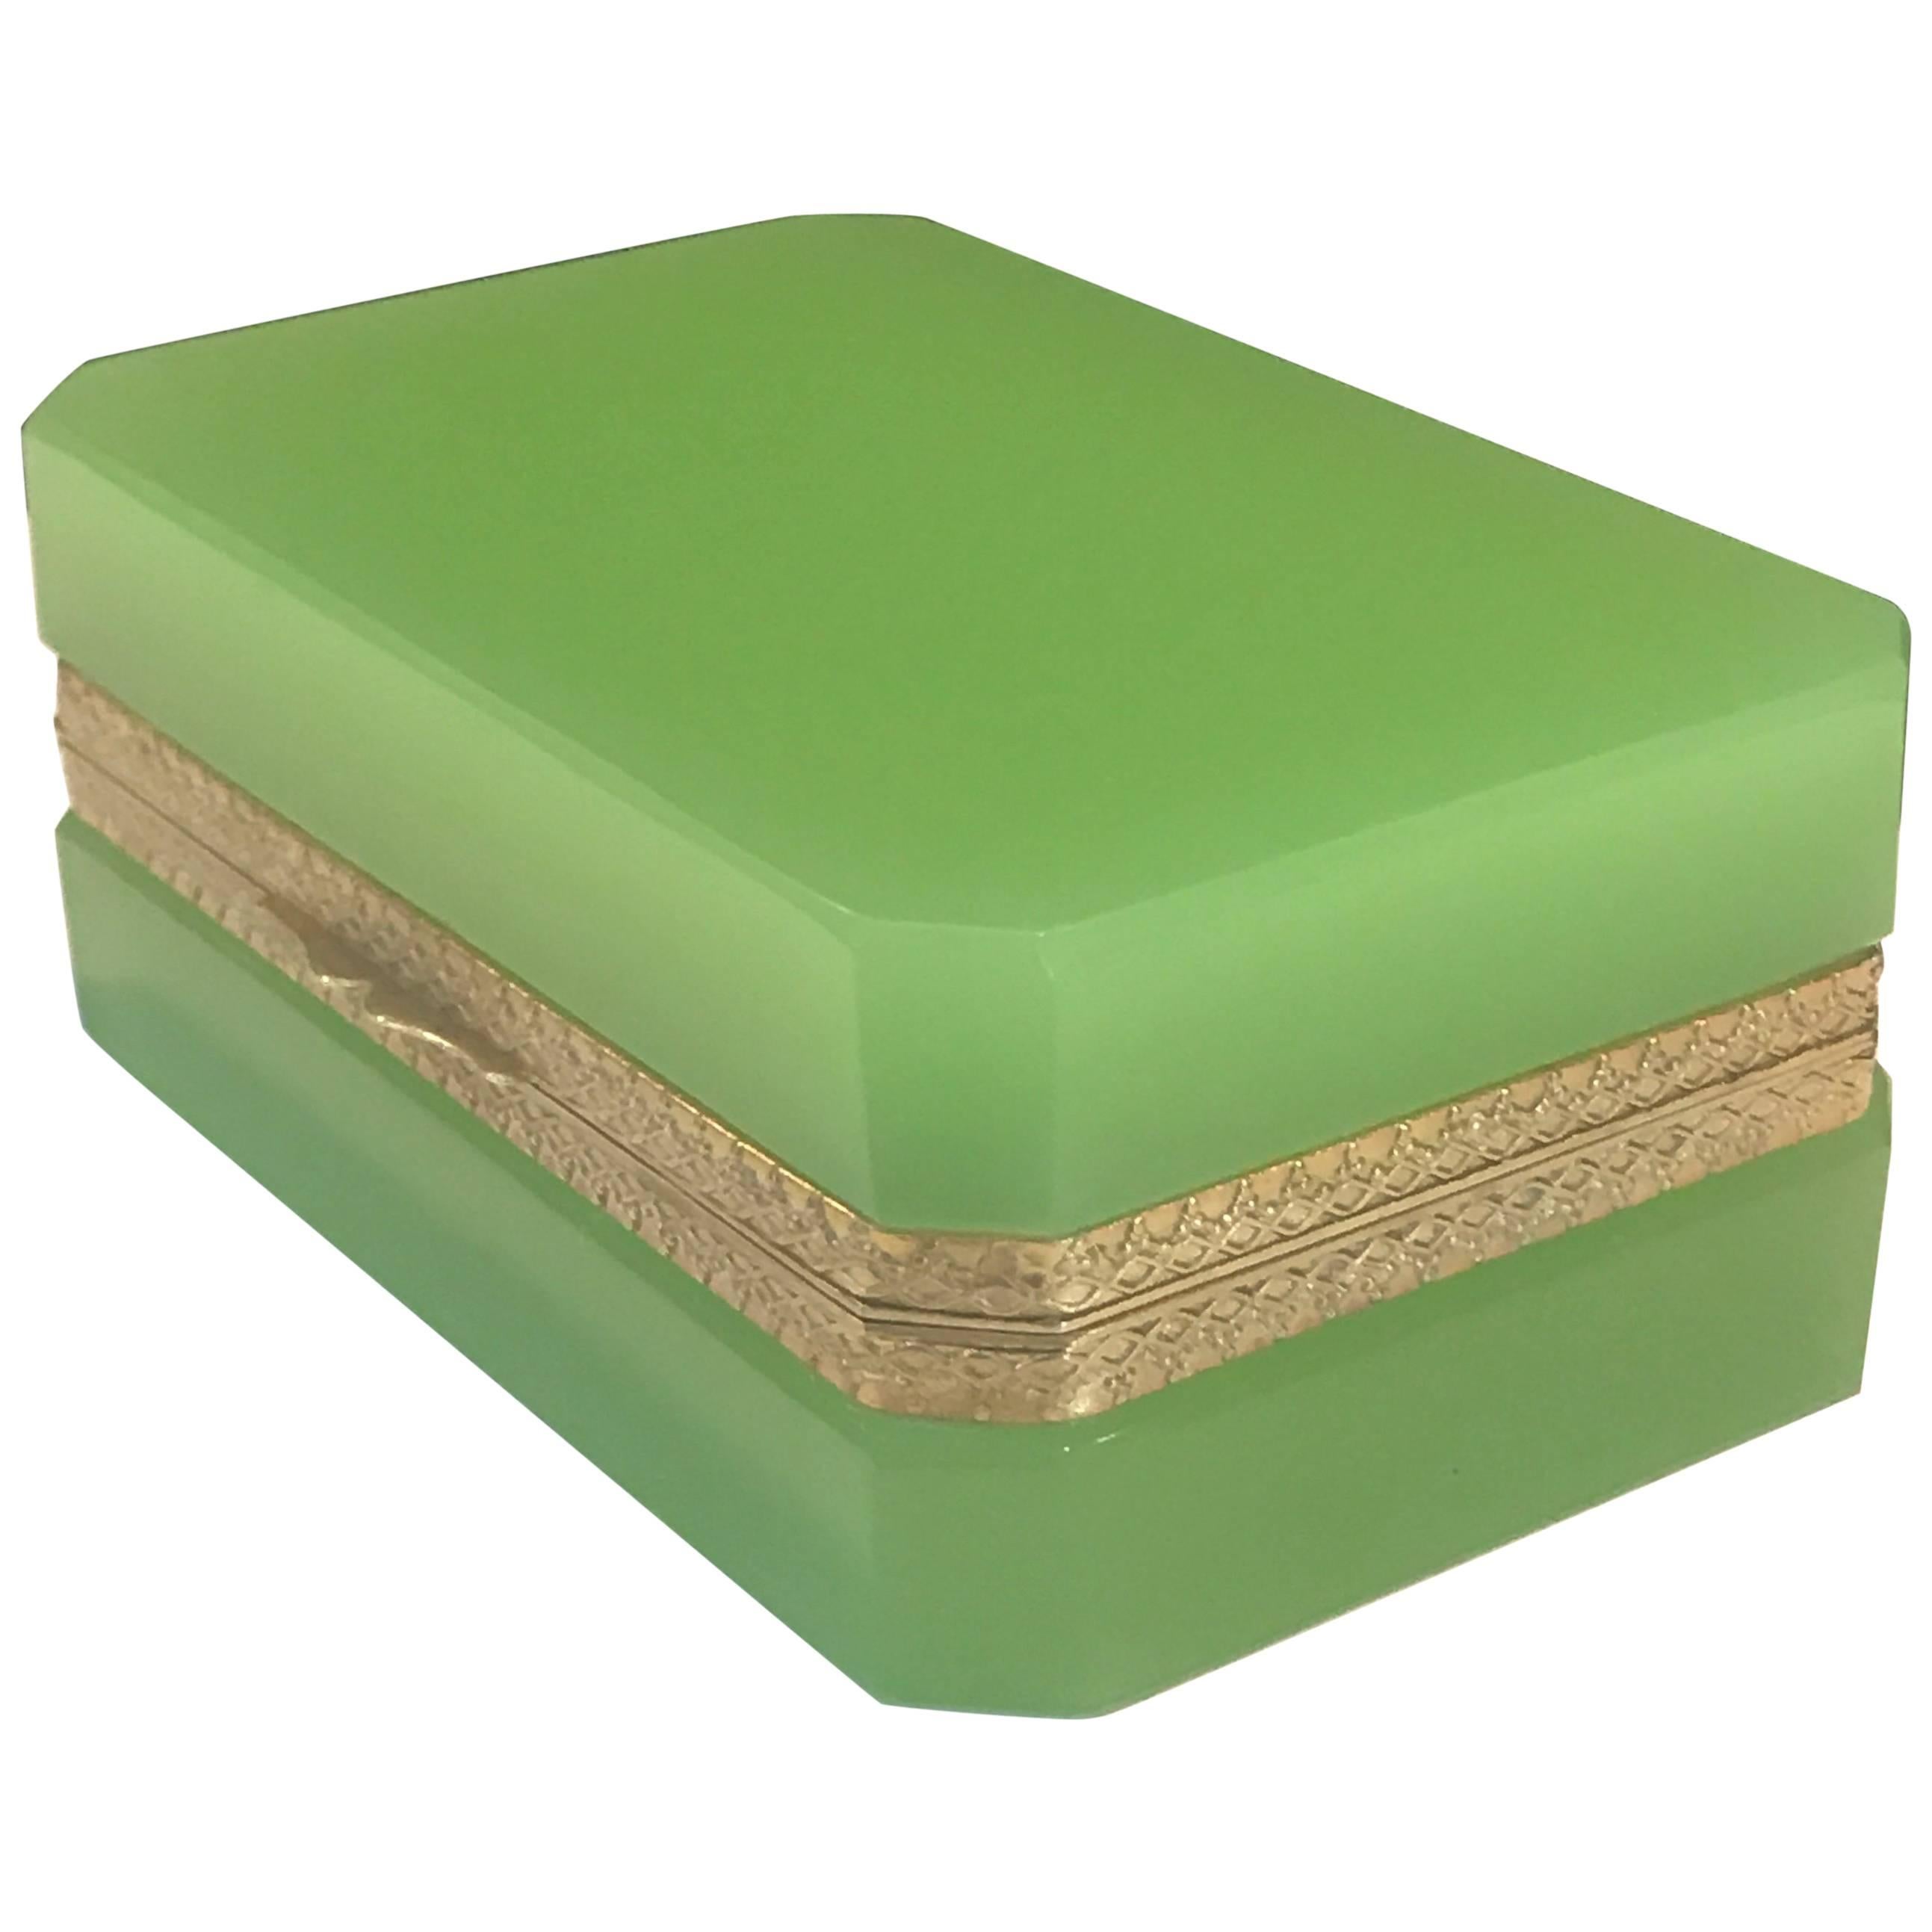 Green opaline ormolu-mounted box, rare shade of green, with cross cut corners and finely cast ormolu bronze mounts.